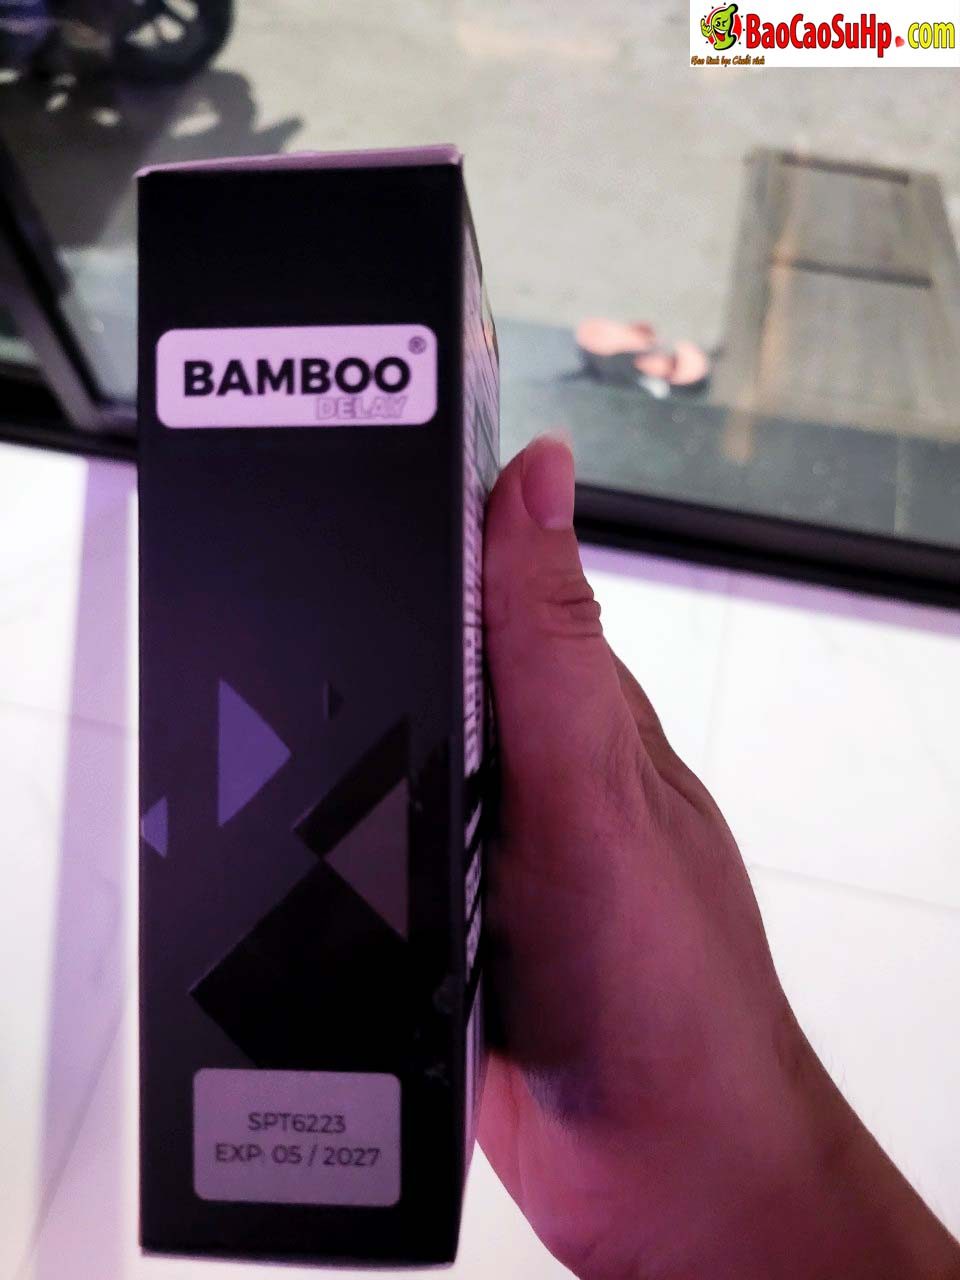 Chai xit keo dai thoi gian USA Bamboo Black Edition 3 - Chai xịt kéo dài thời gian USA Bamboo Black Edition 15ml 13%